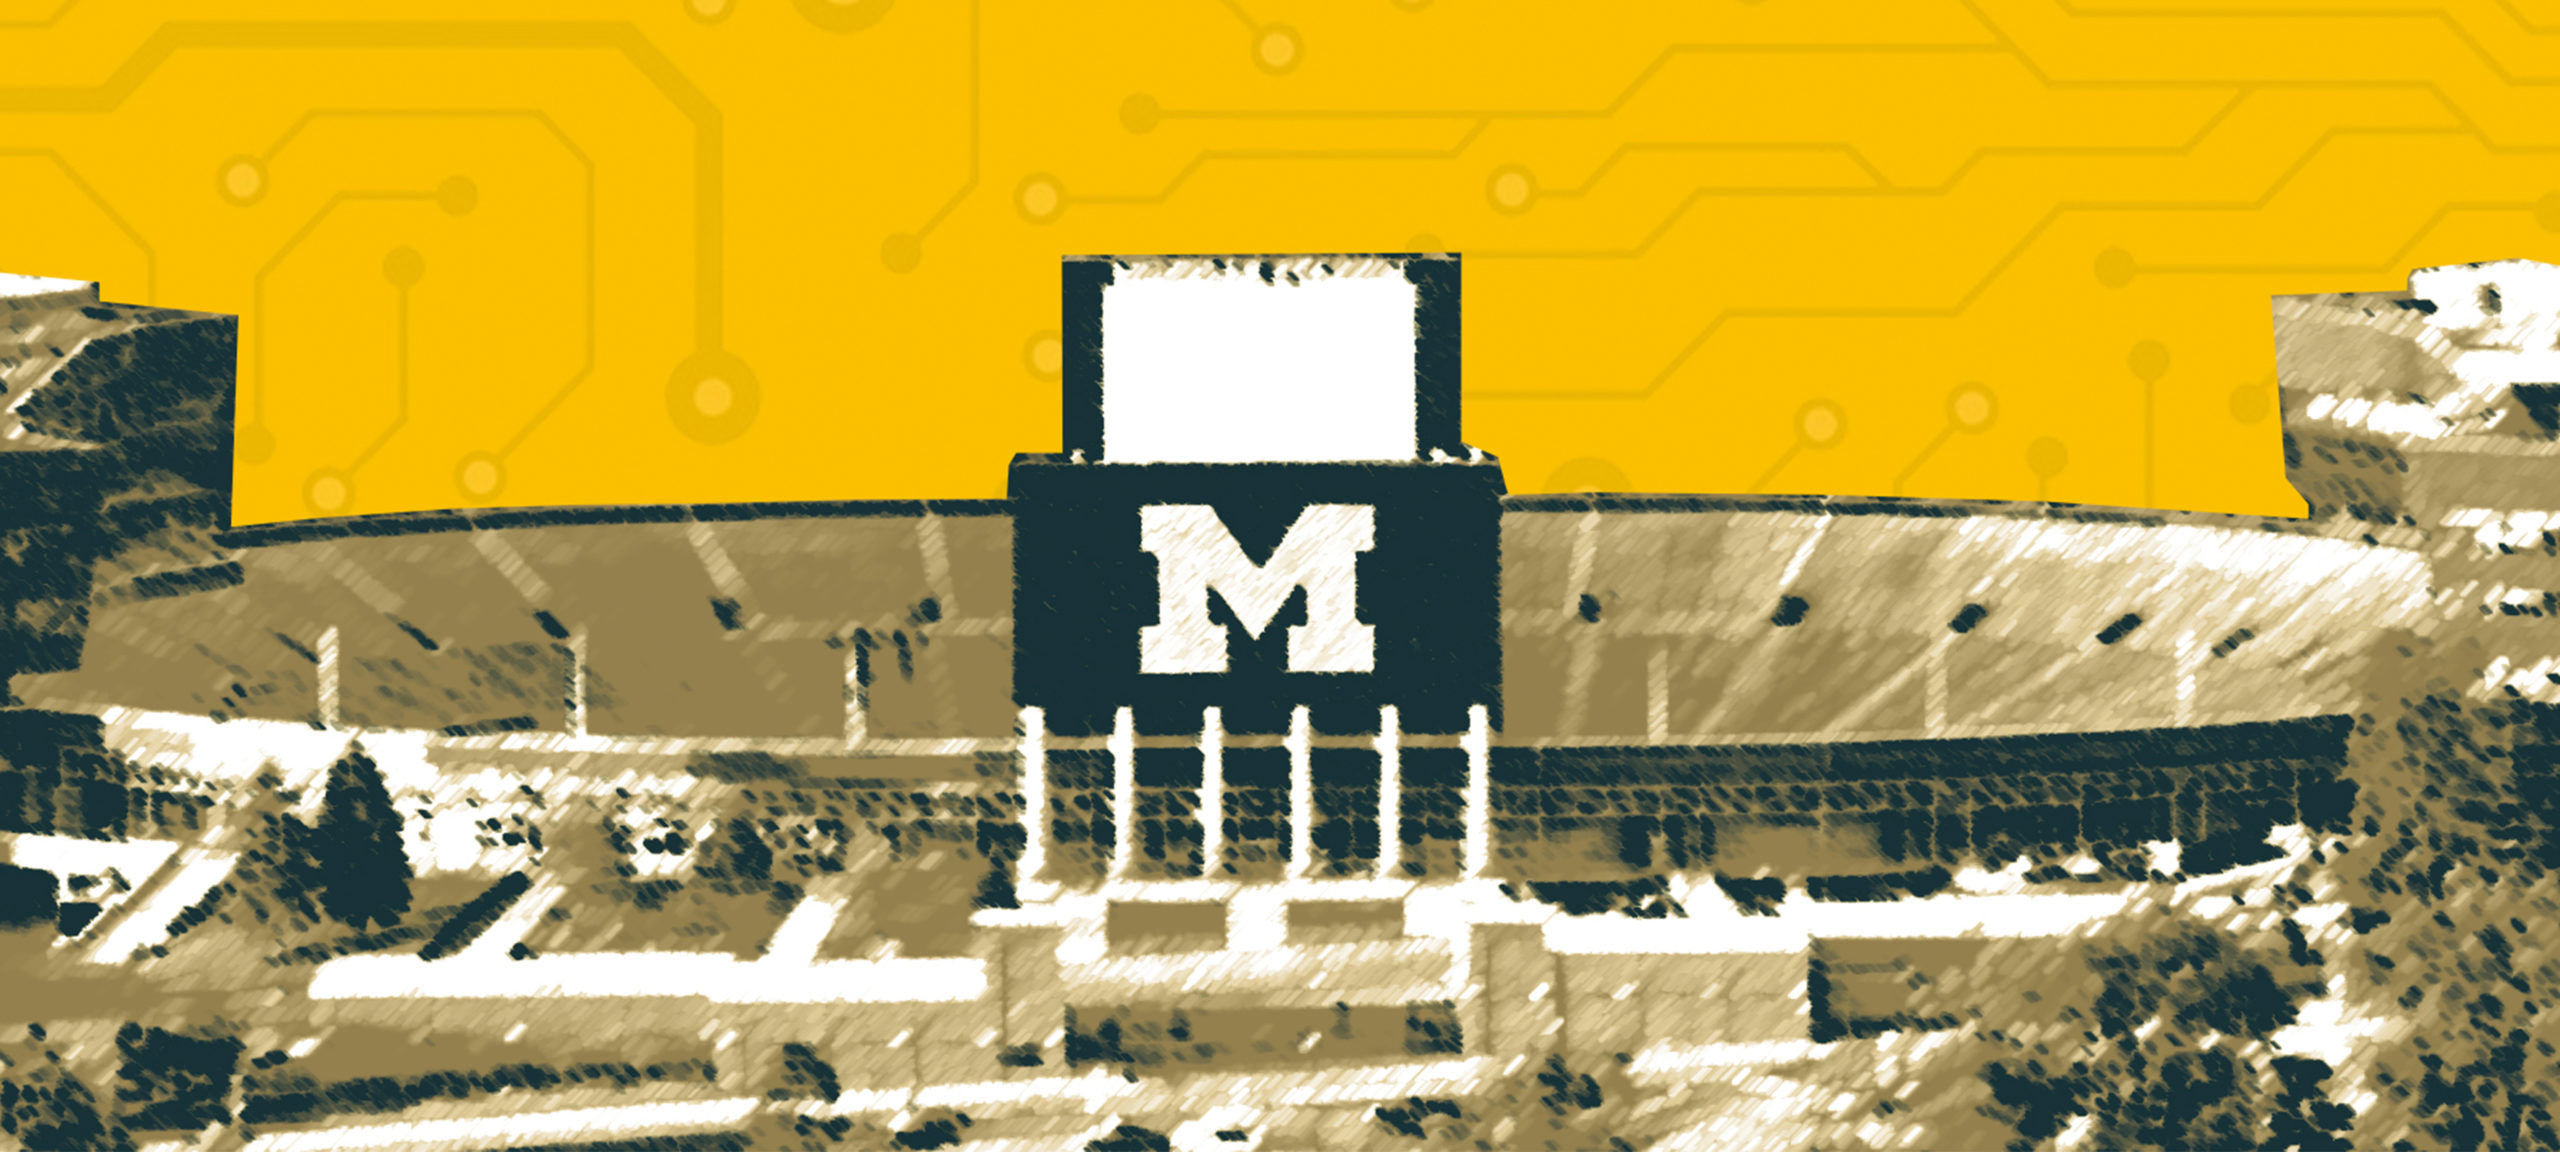 Graphic of the Michigan Stadium